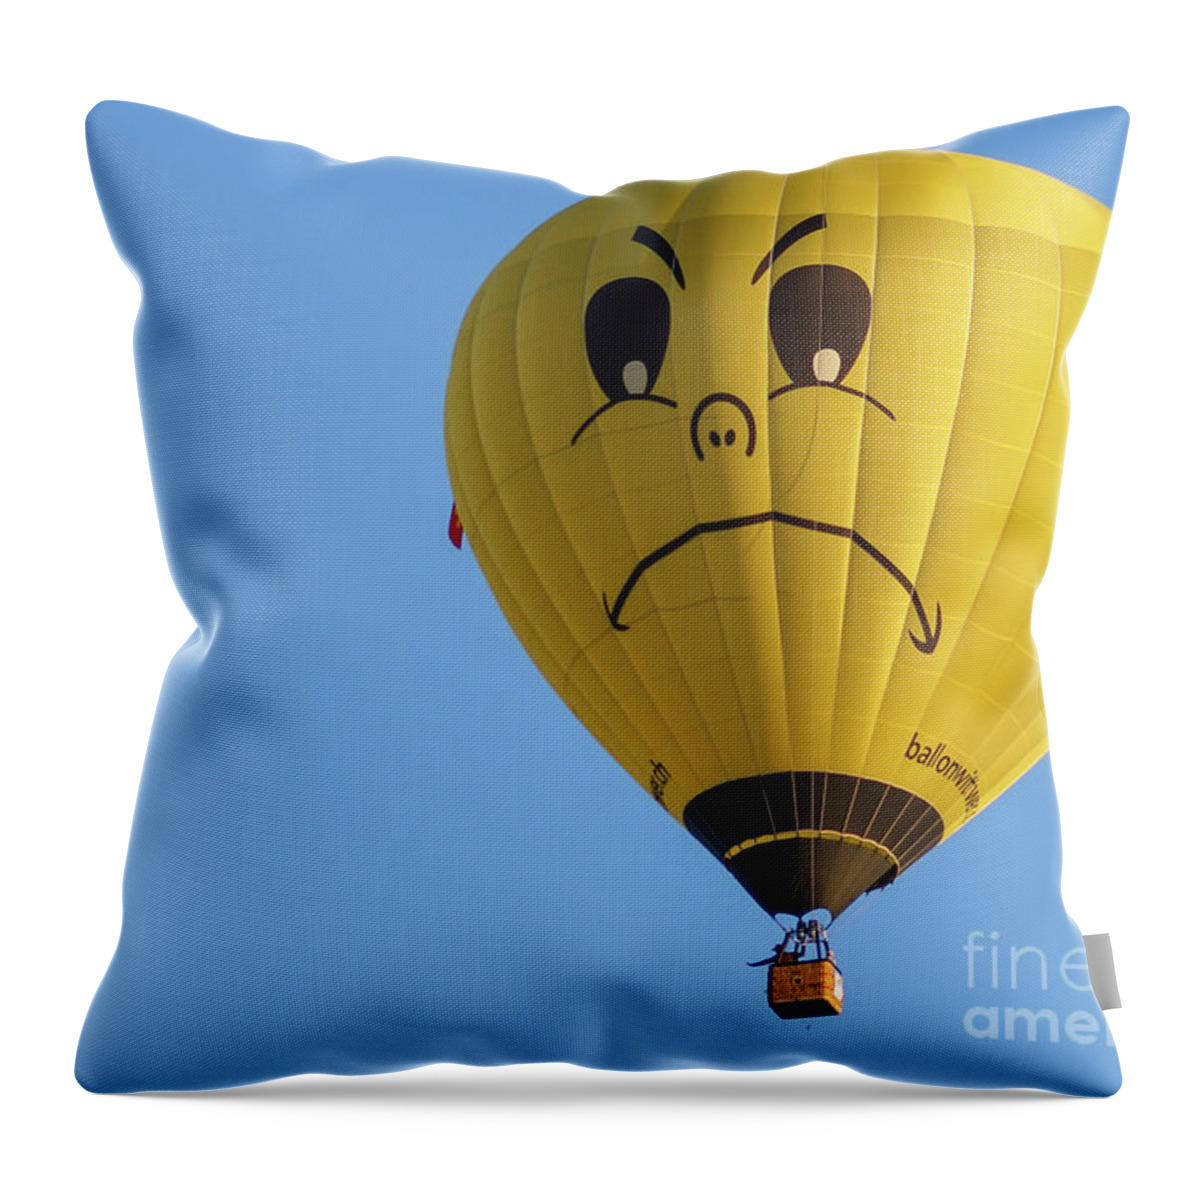 Hot Air Balloon Throw Pillow featuring the photograph Hot Air Balloon Not Happy by Claudia Zahnd-Prezioso